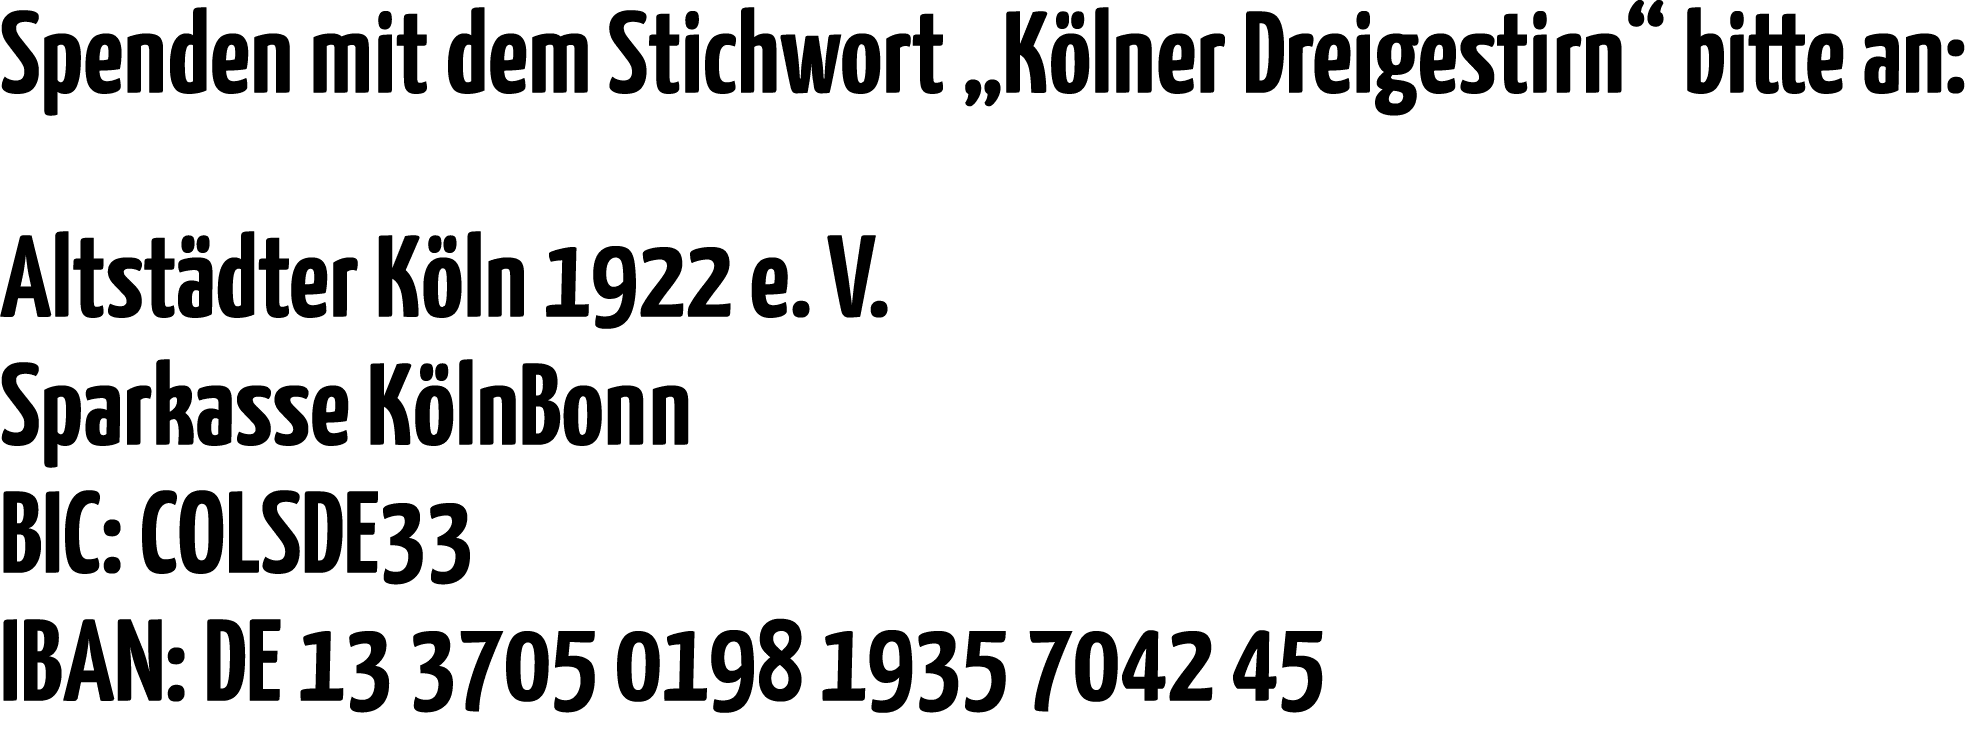 Spenden mit dem Stichwort  Kölner Dreigestirn  bitte an: Altstädter Köln 1922 e  V  Sparkasse KölnBonn BIC: COLSDE33    